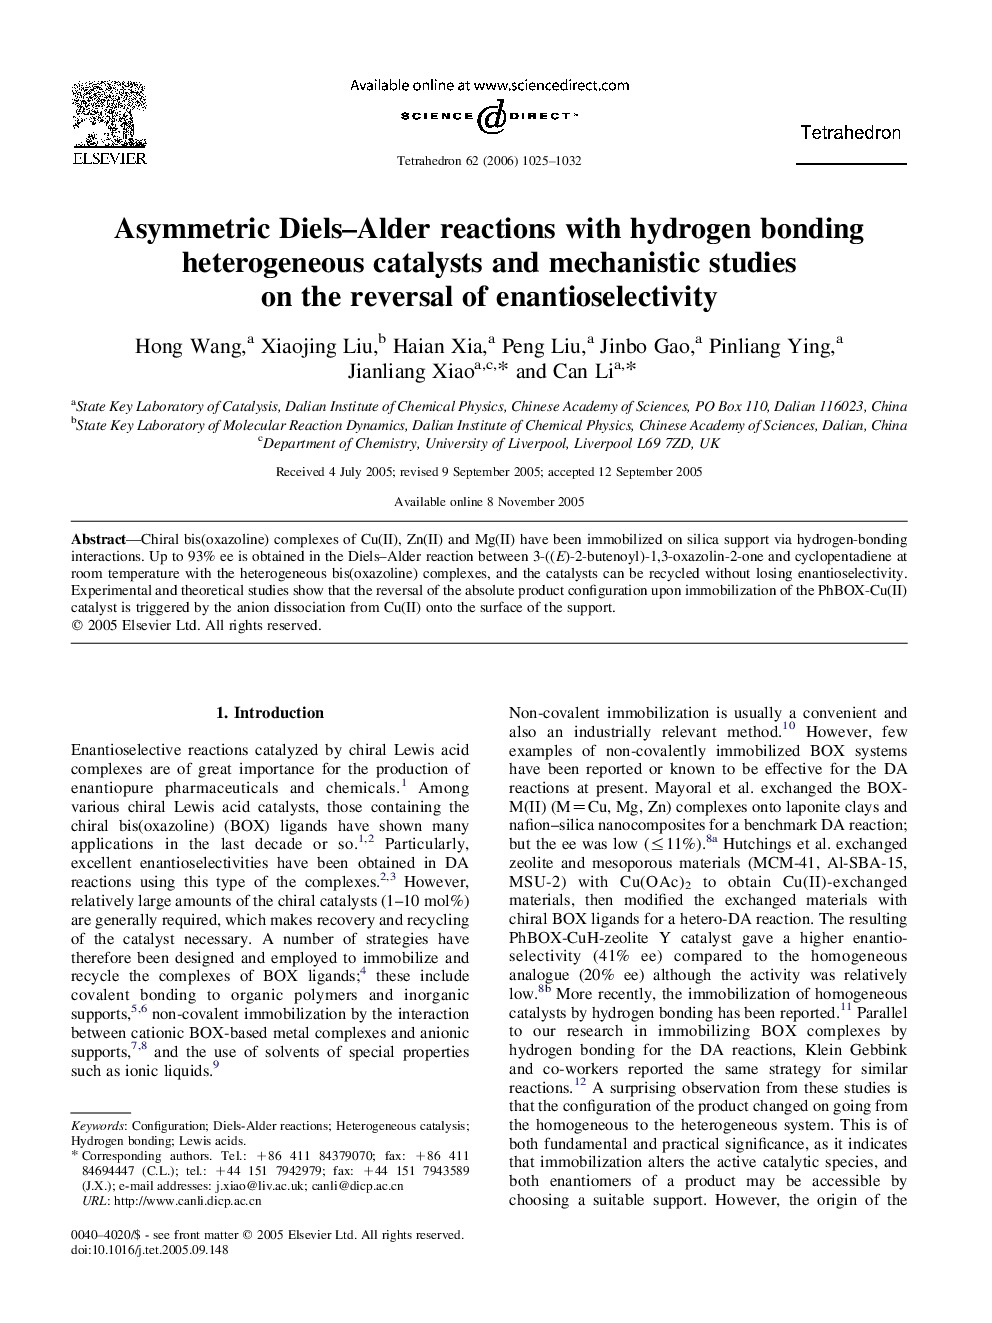 Asymmetric Diels-Alder reactions with hydrogen bonding heterogeneous catalysts and mechanistic studies on the reversal of enantioselectivity